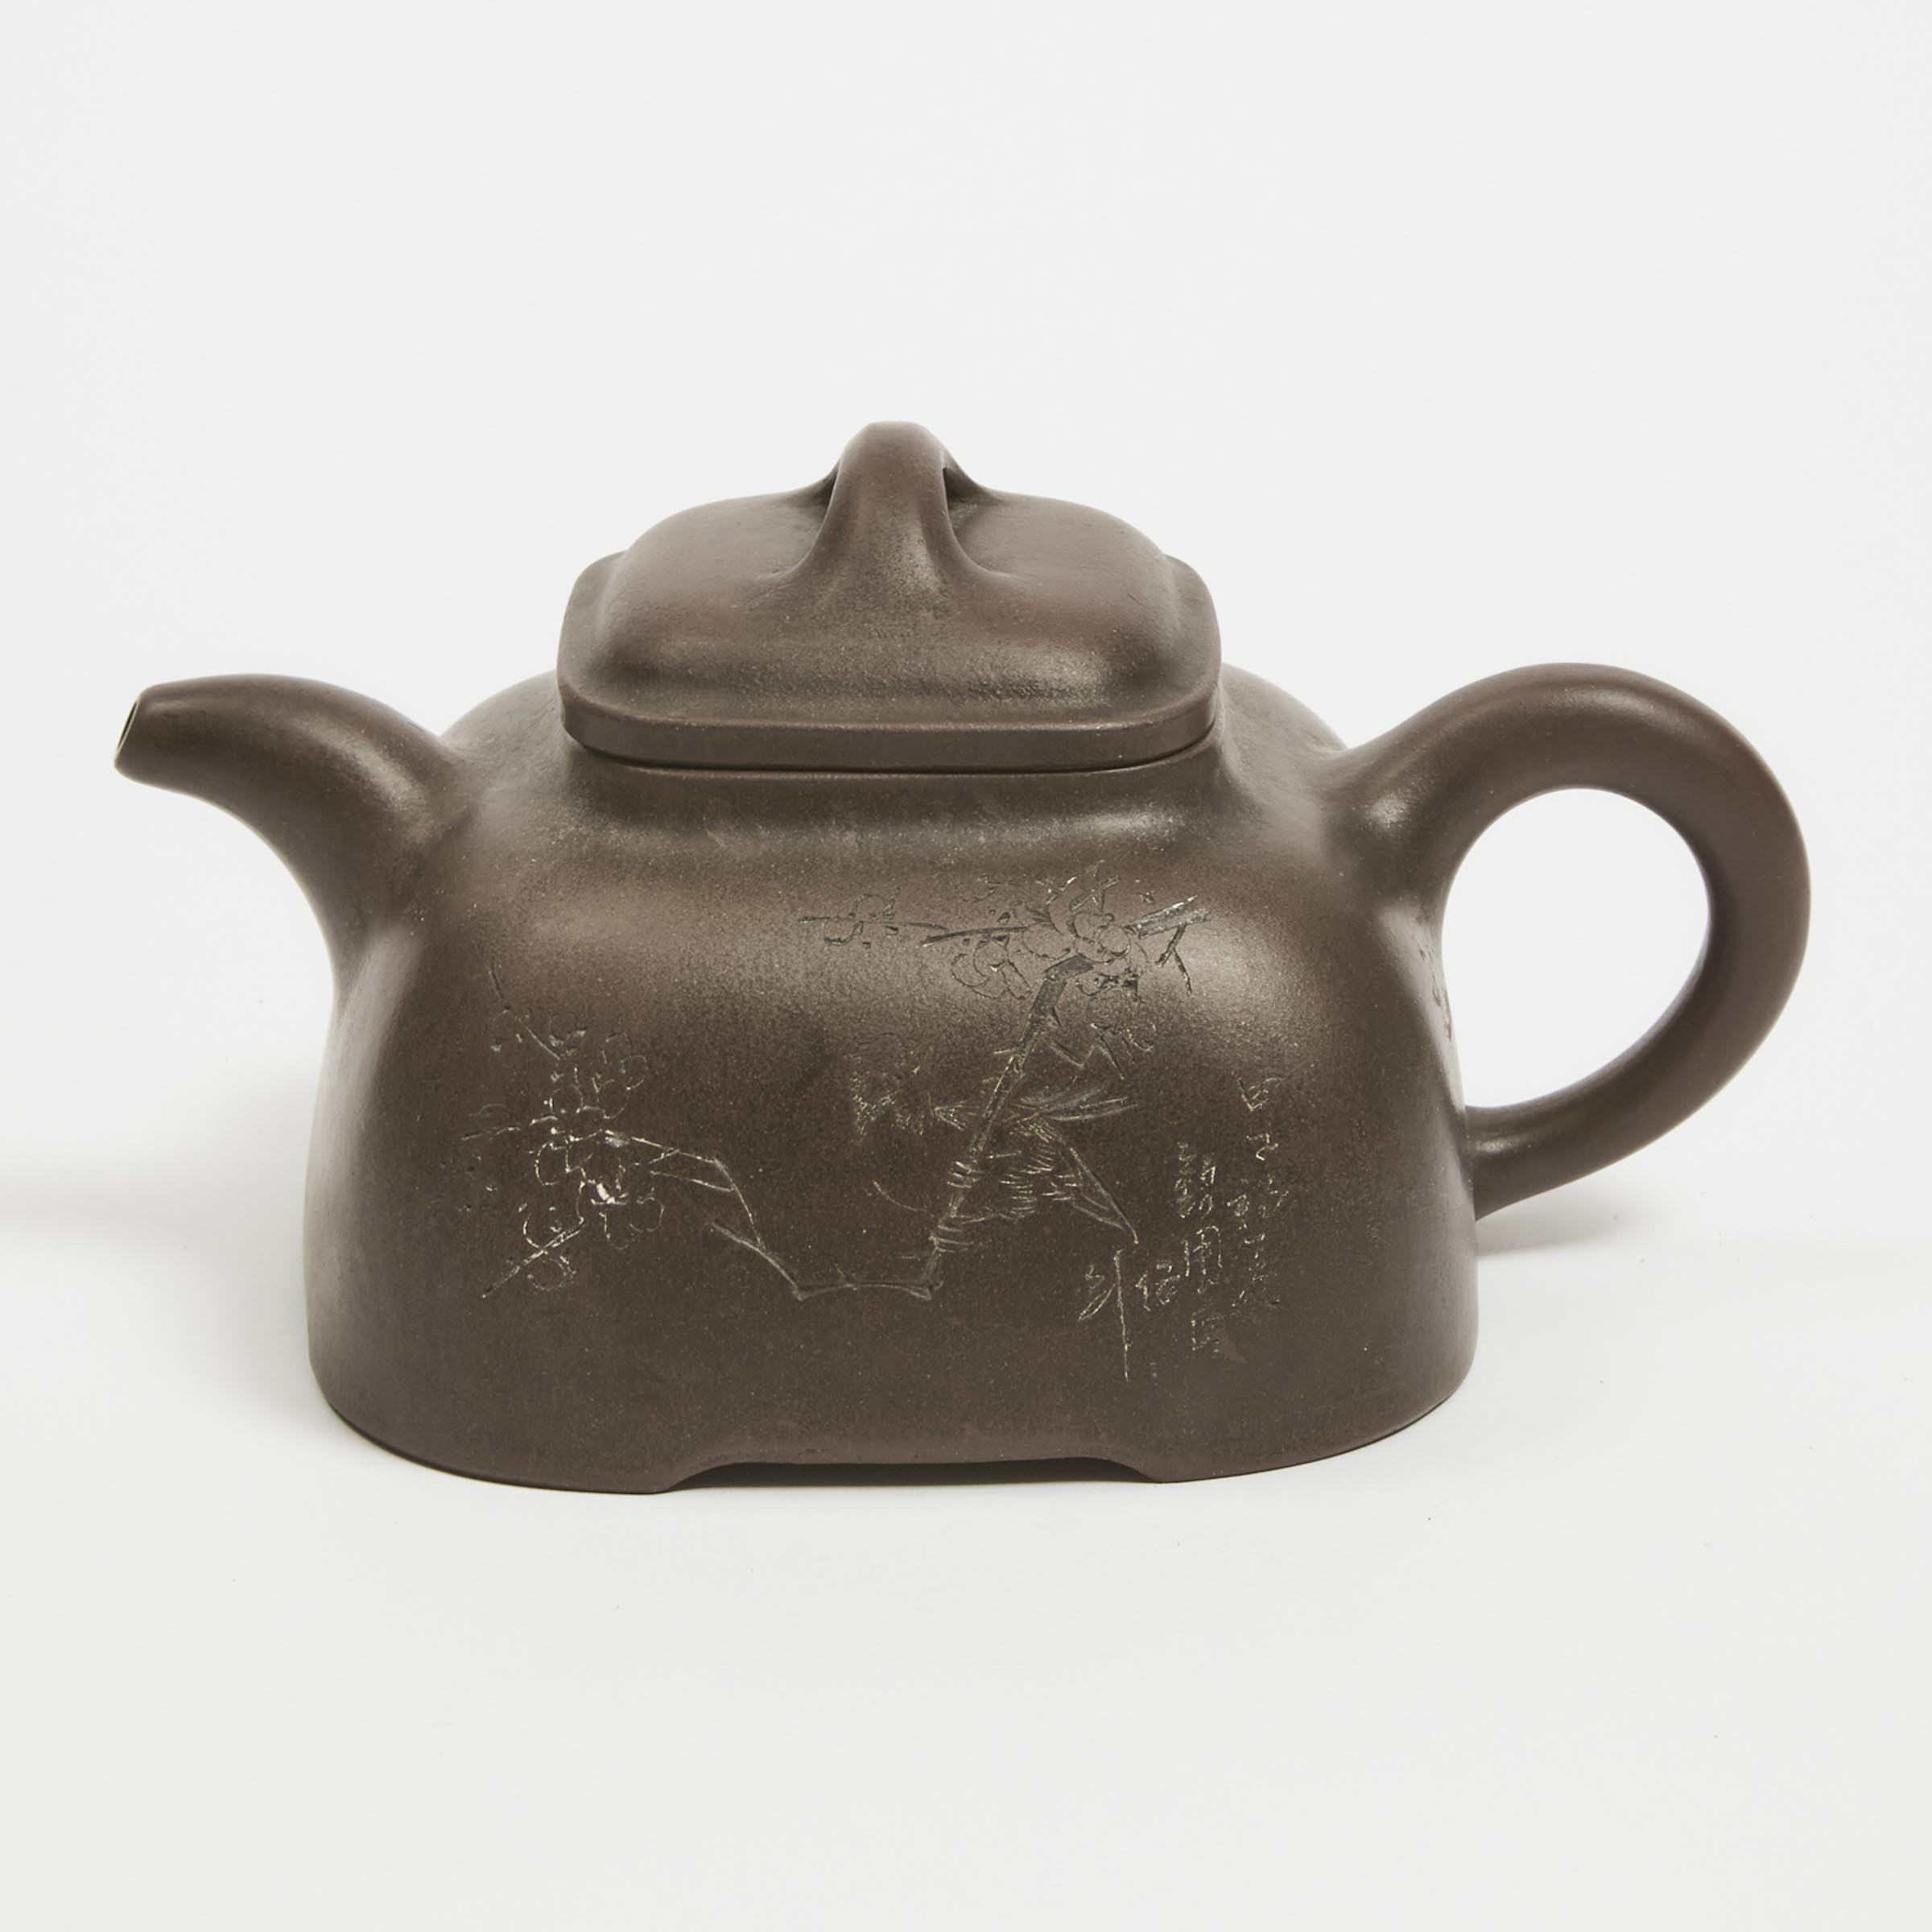 A Yixing/Zisha Square Teapot, Republican Period, Early 20th Century